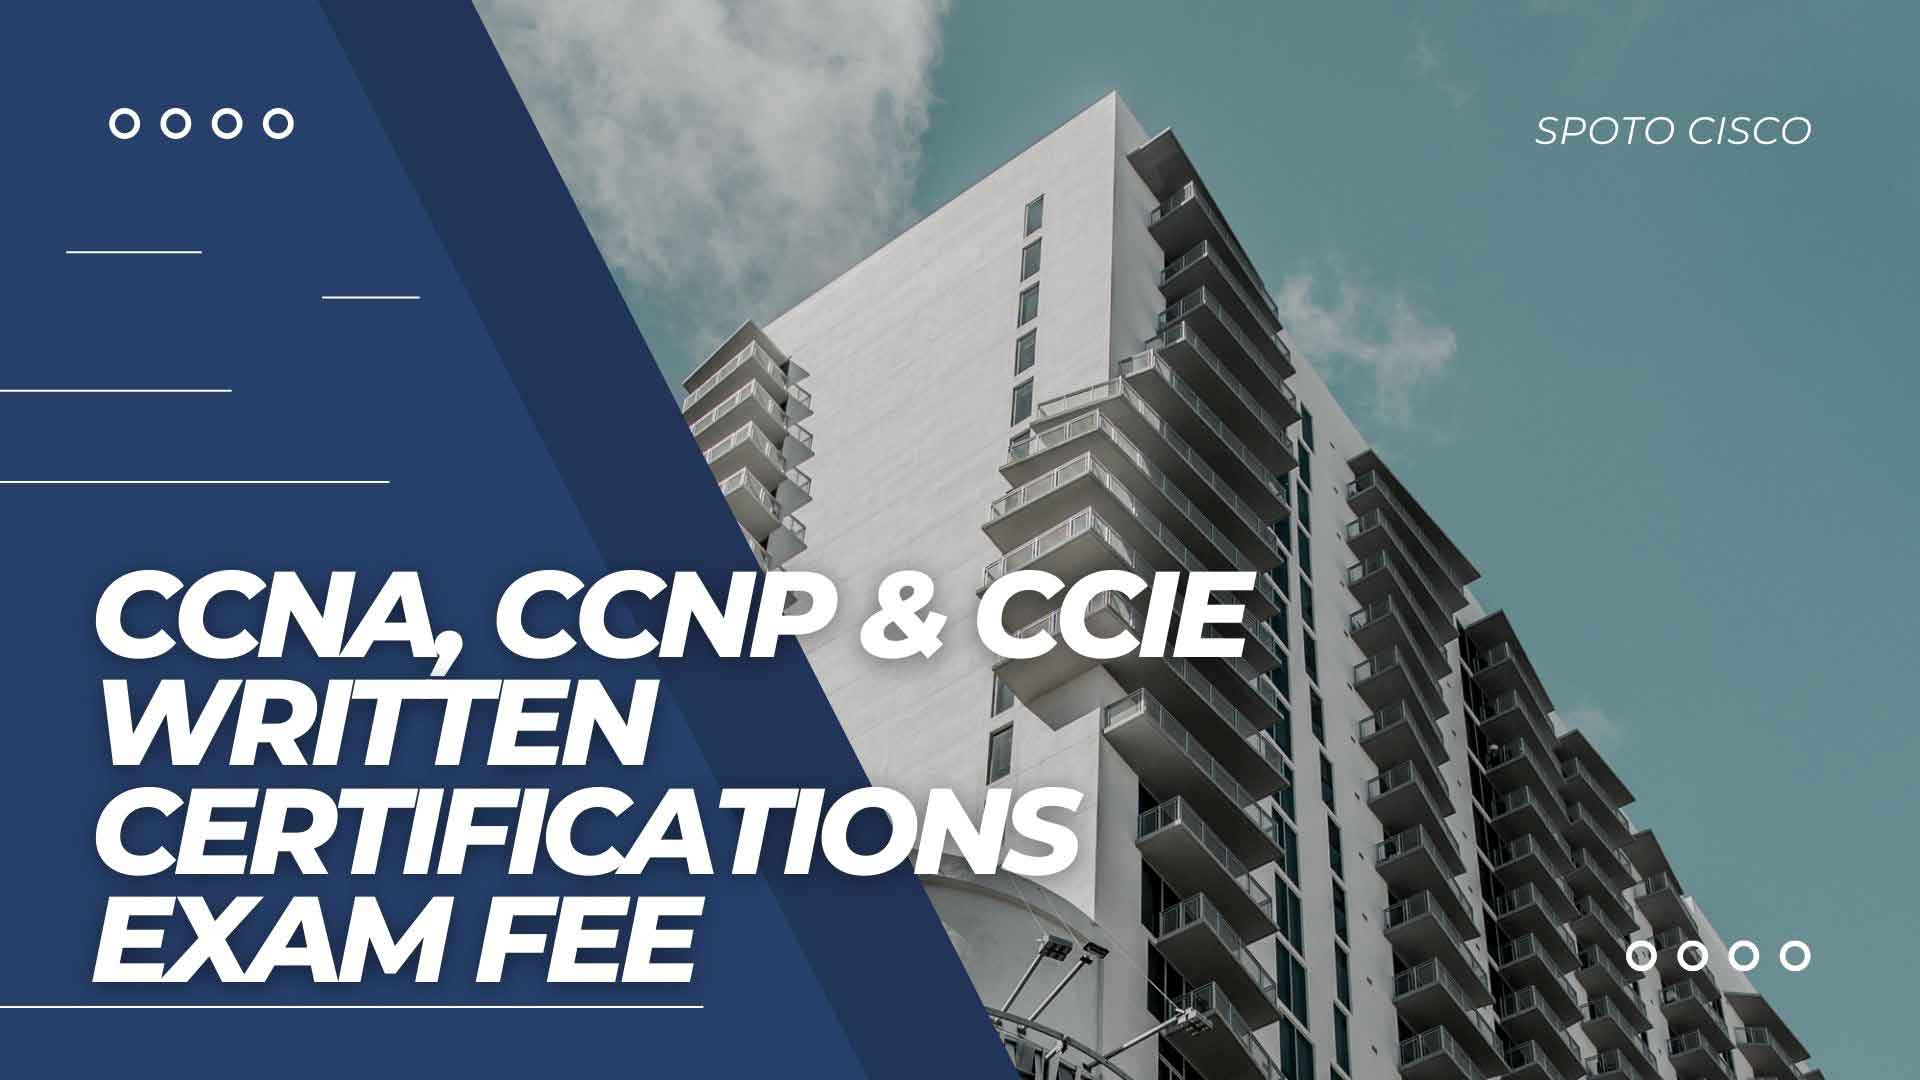 CCNA, CCNP cost